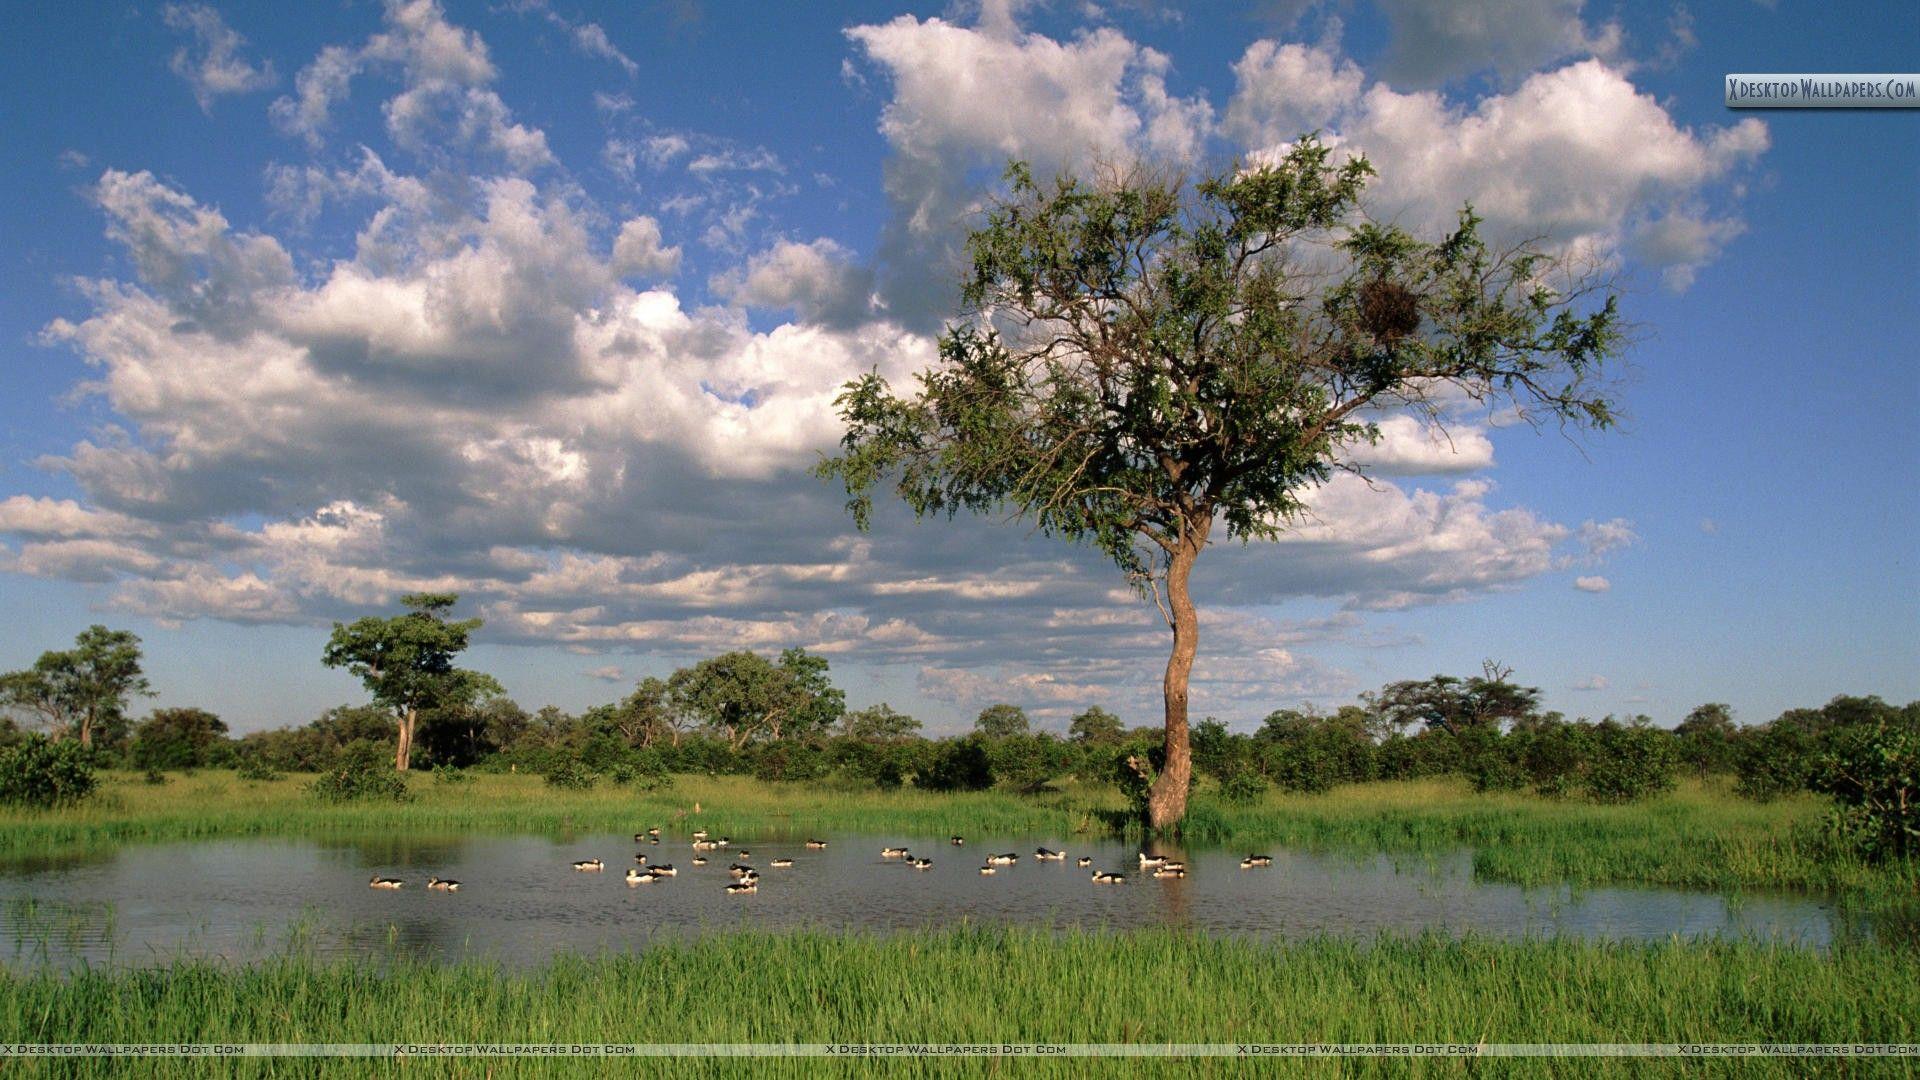 Comb Ducks on Lake, Savute Chobe National Park, Botswana Wallpaper